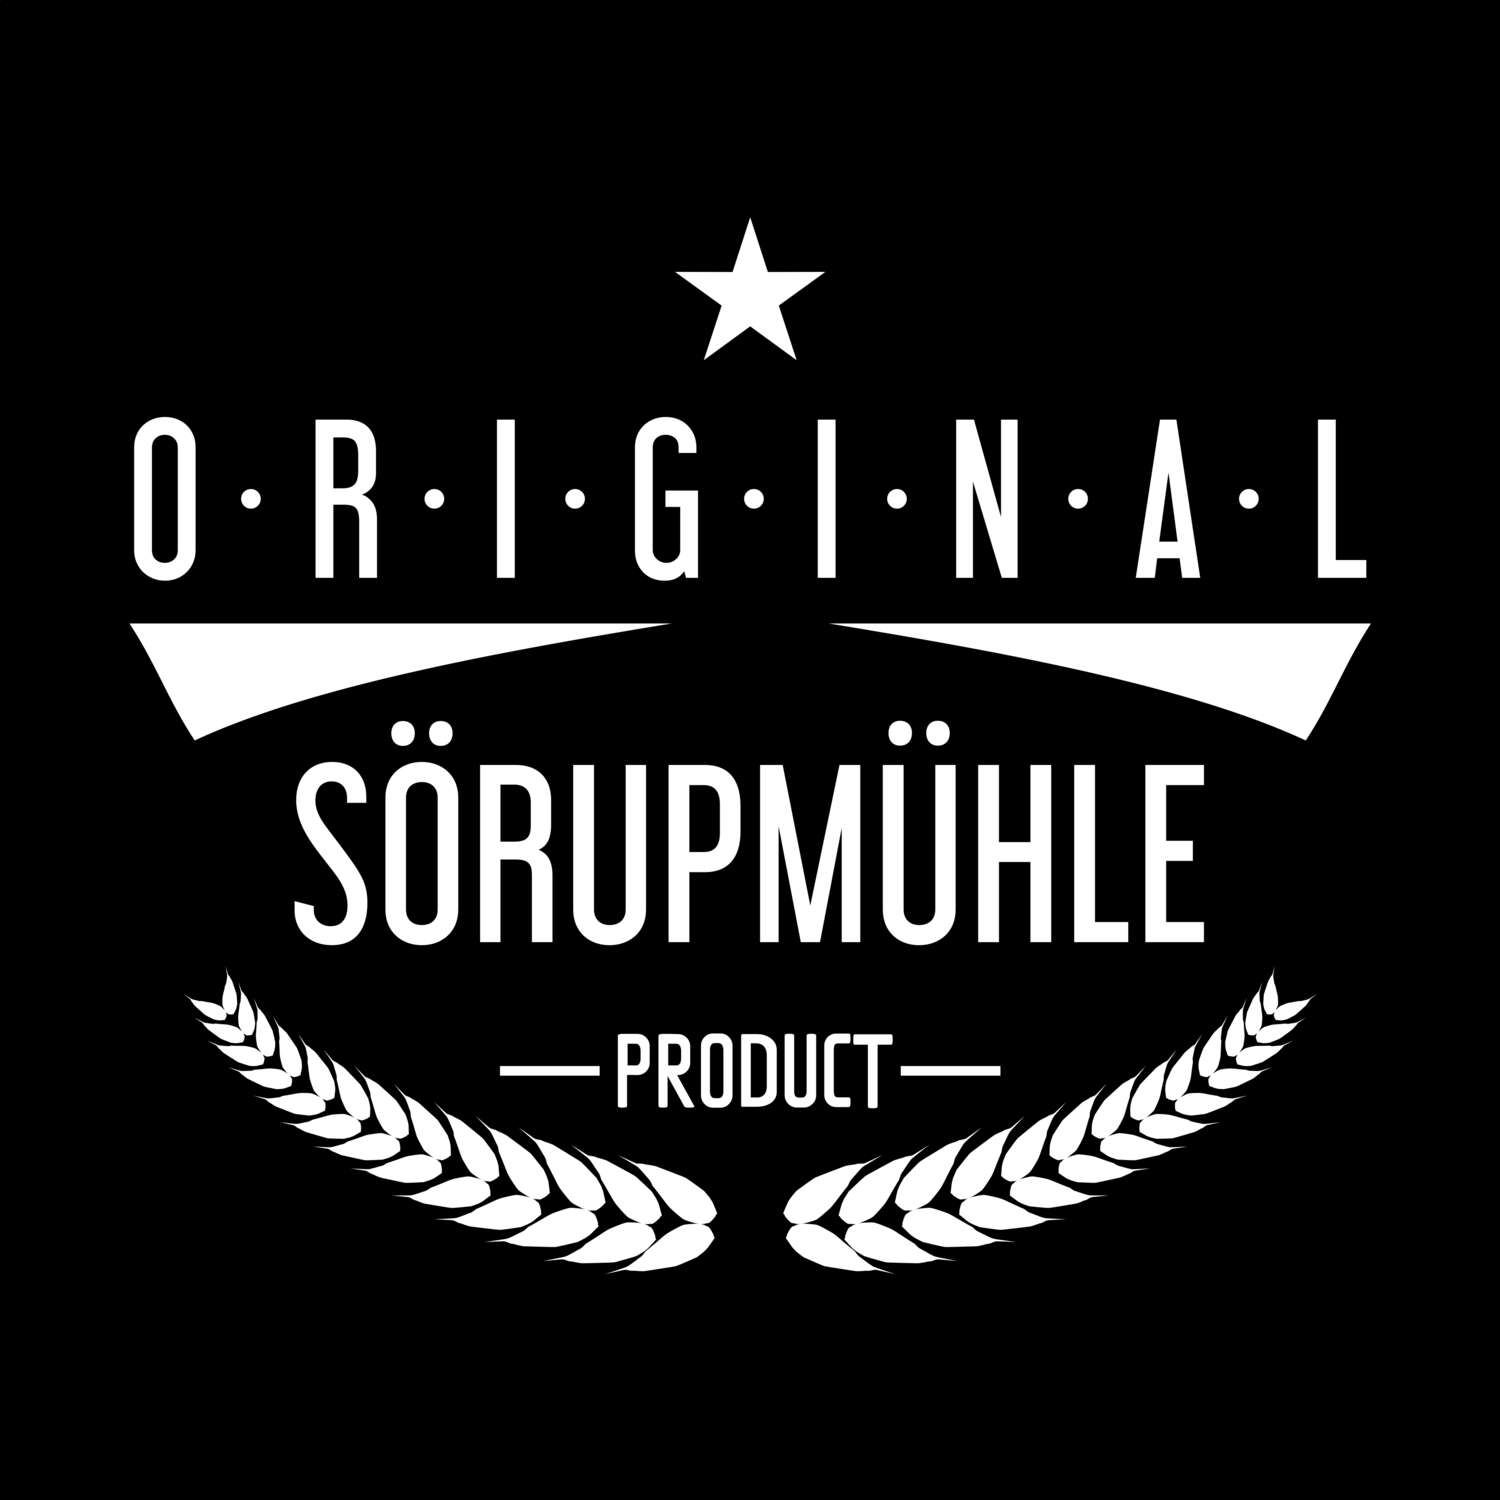 Sörupmühle T-Shirt »Original Product«